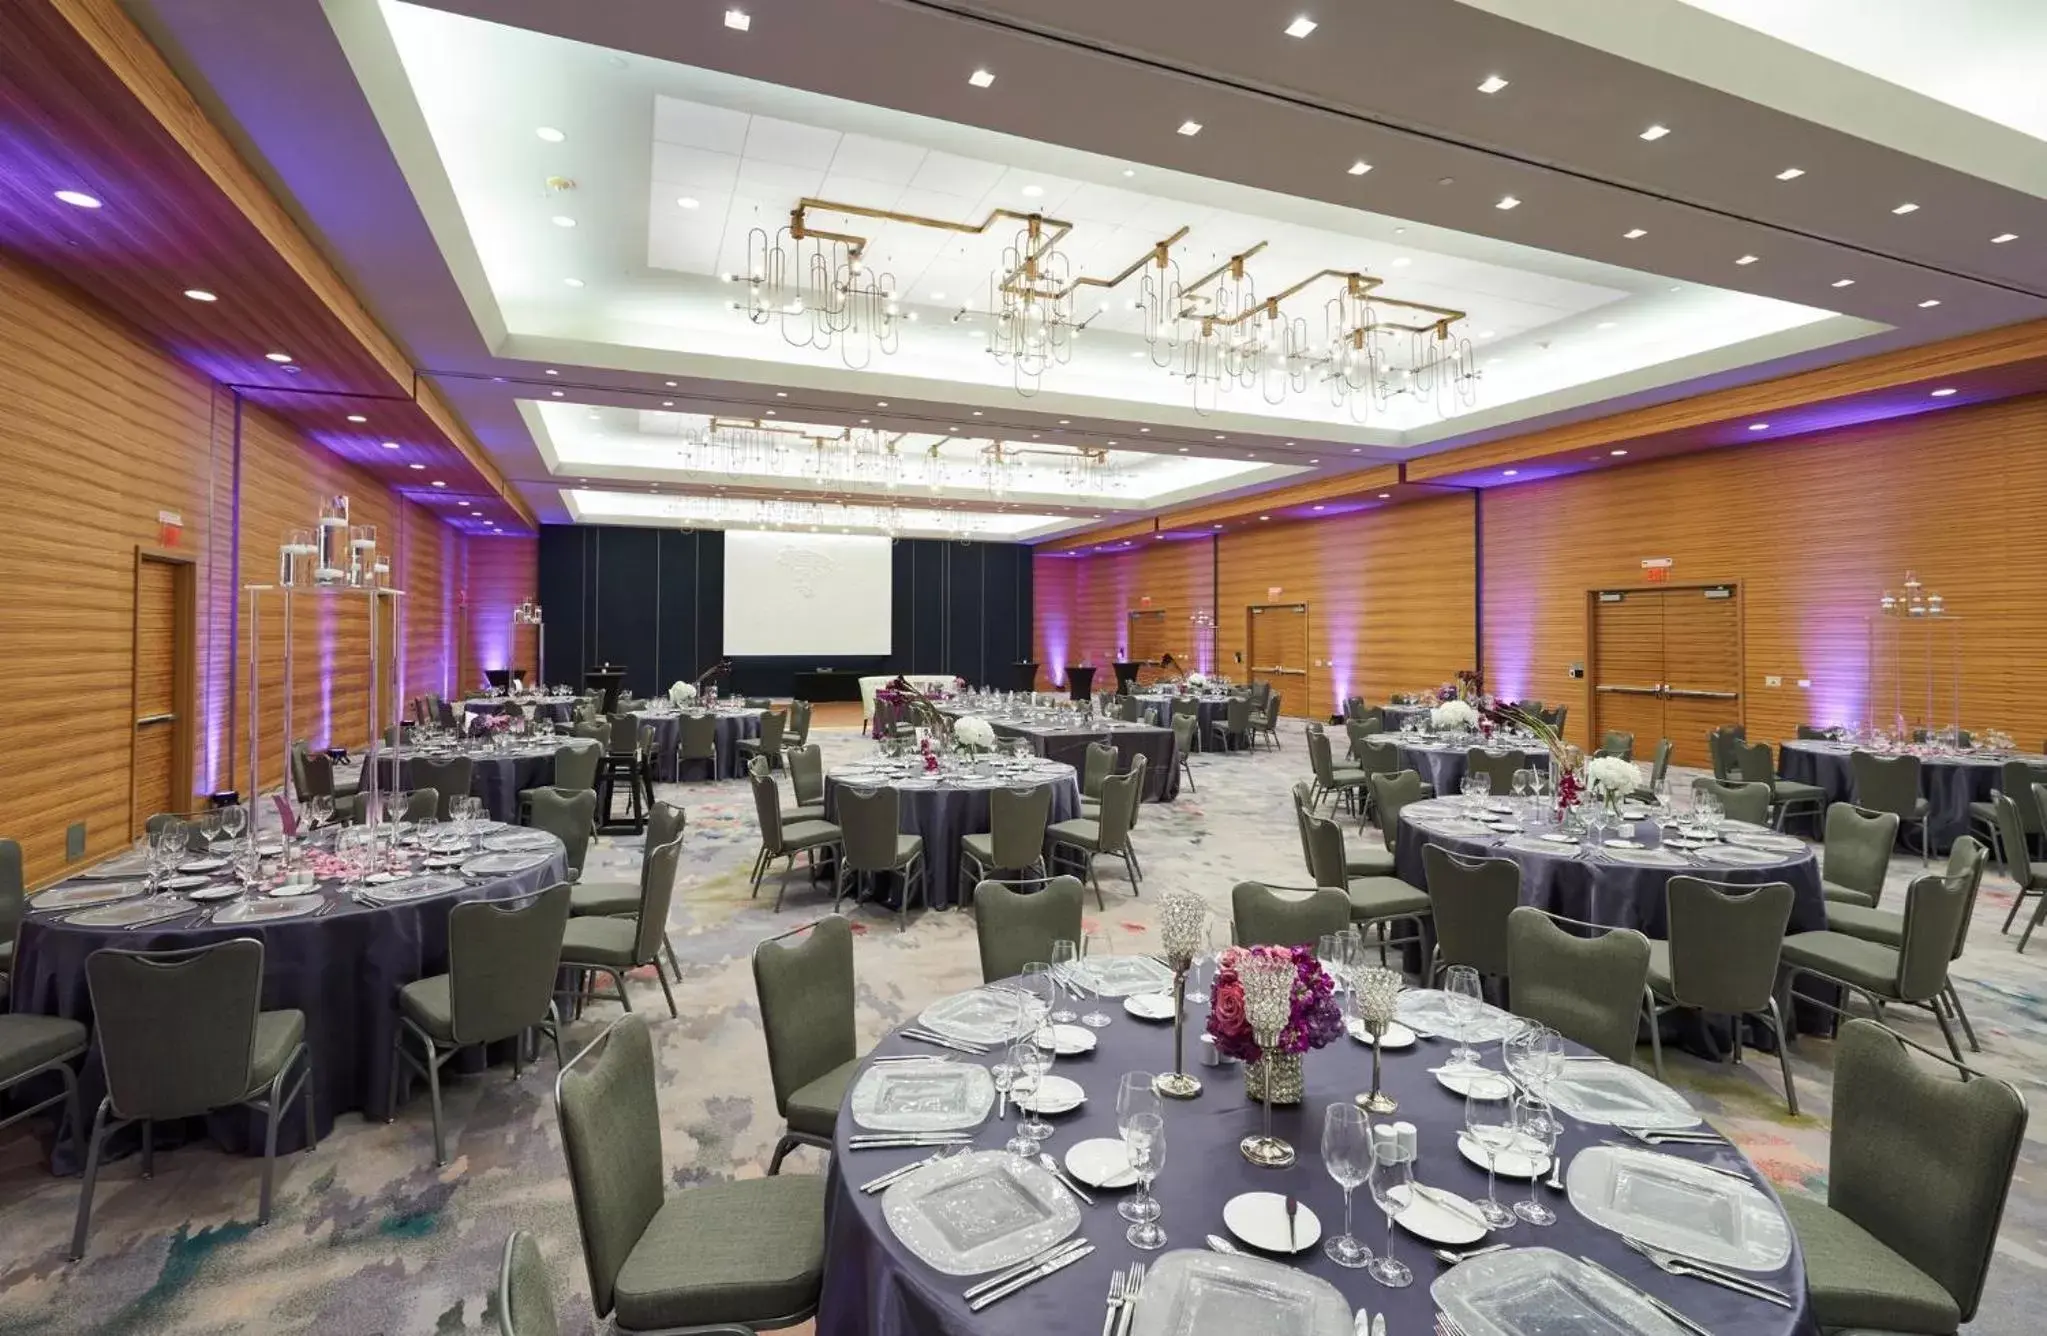 Banquet/Function facilities, Banquet Facilities in Loews Minneapolis Hotel